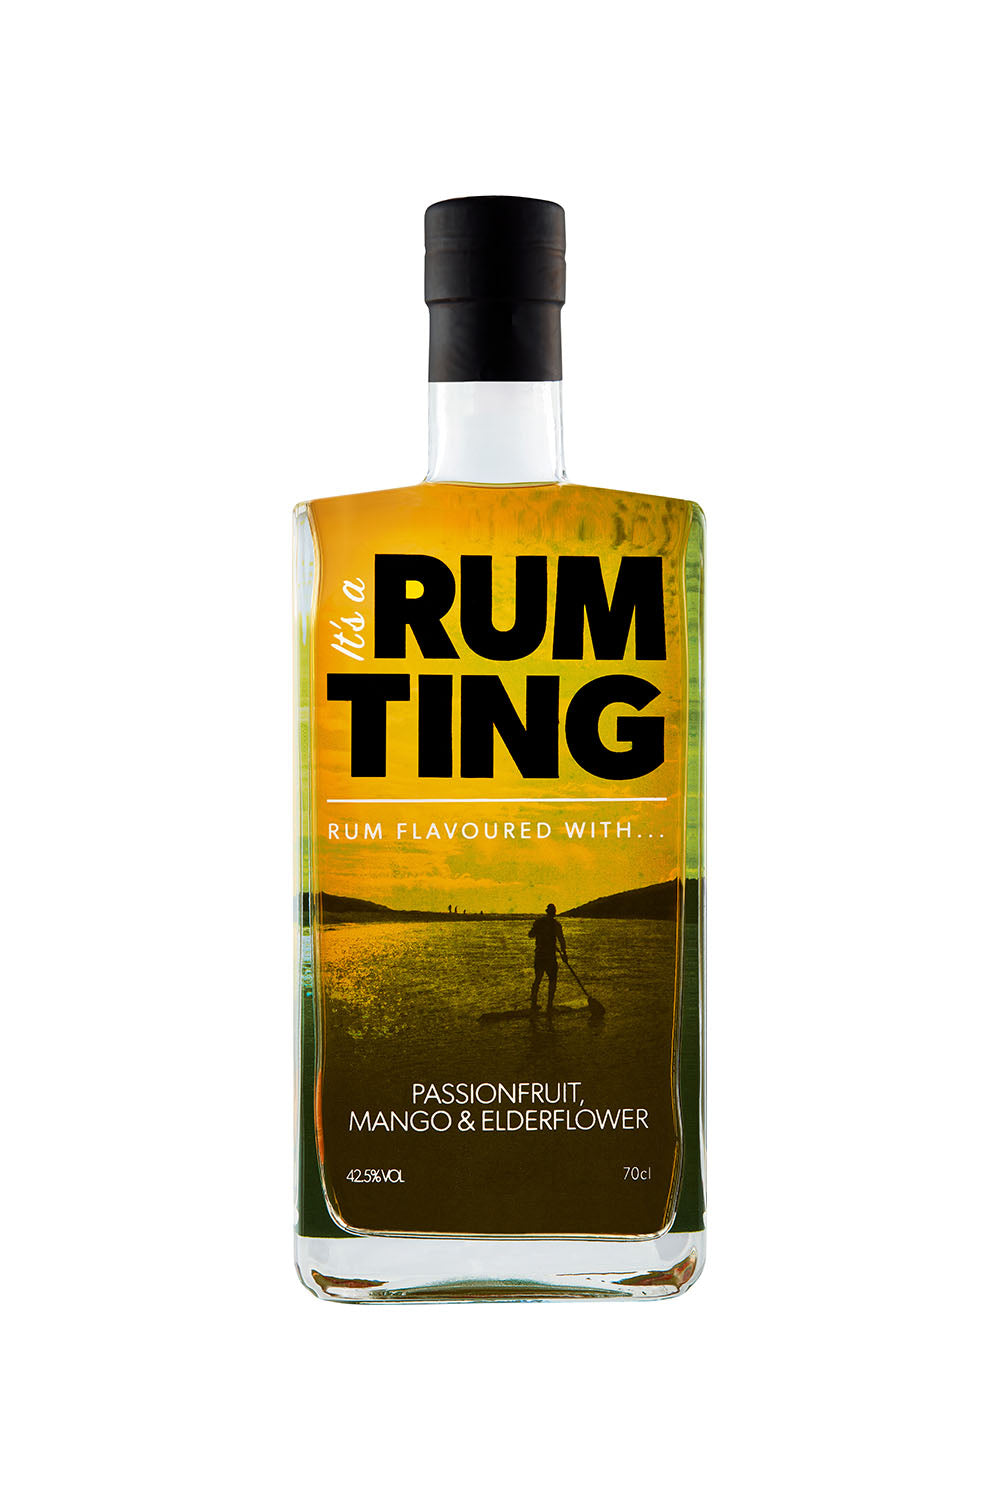 RumTing, Passionfruit Mango and Elderflower Rum